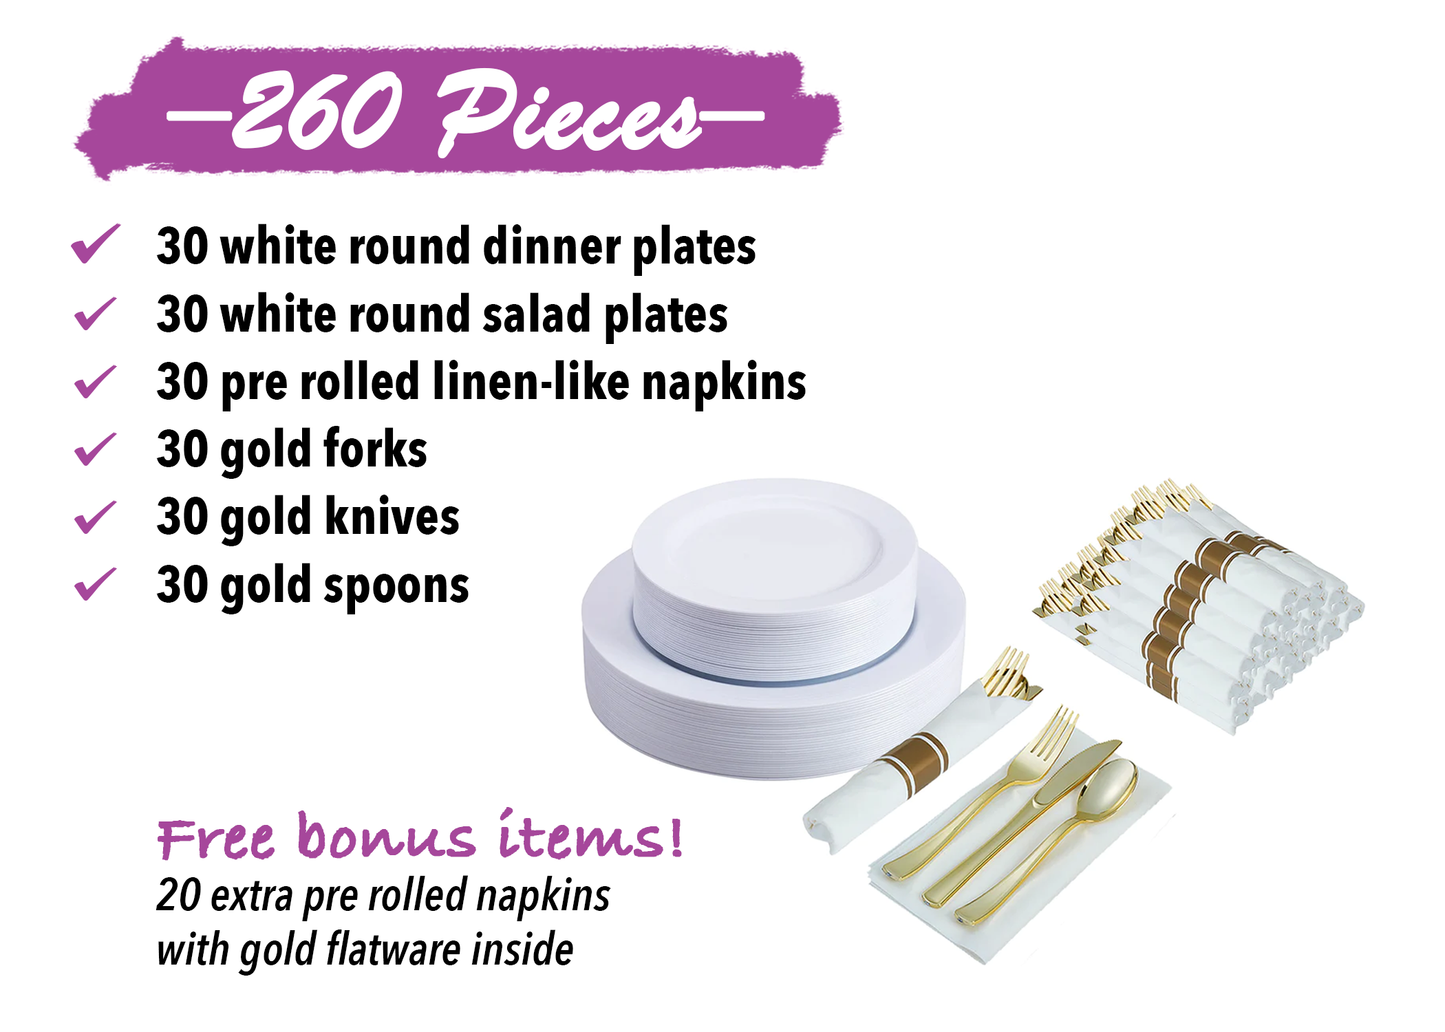 260 -Piece white dinnerware set for 30 guests Includes: 60 white design plastic plates, 250 plastic gold silverware utensils, 50 napkins & 50 cups